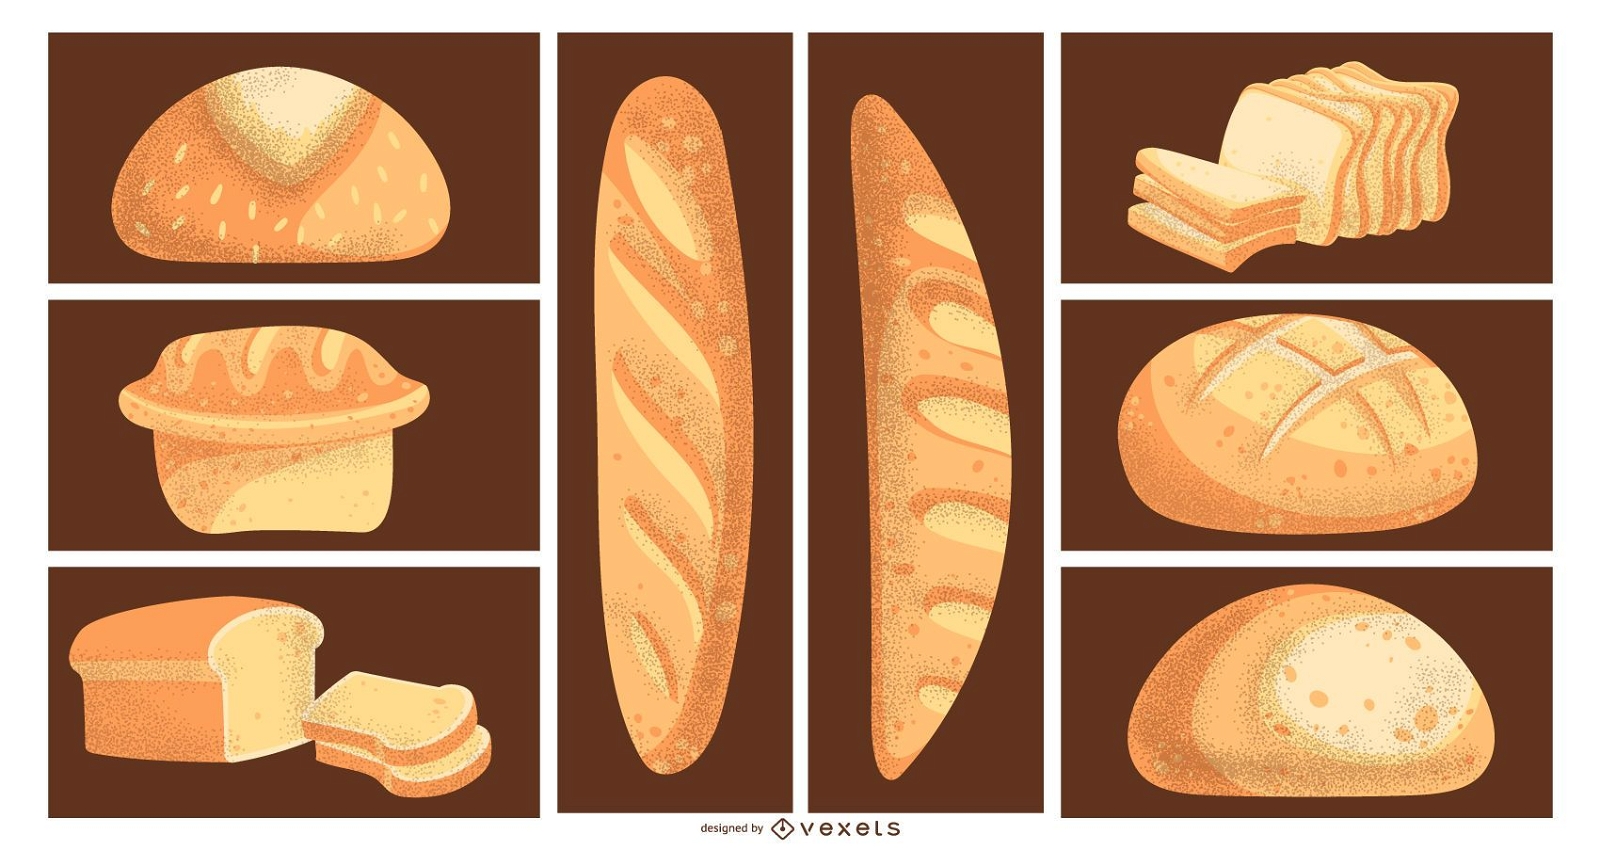 Brot Illustrationen gesetzt